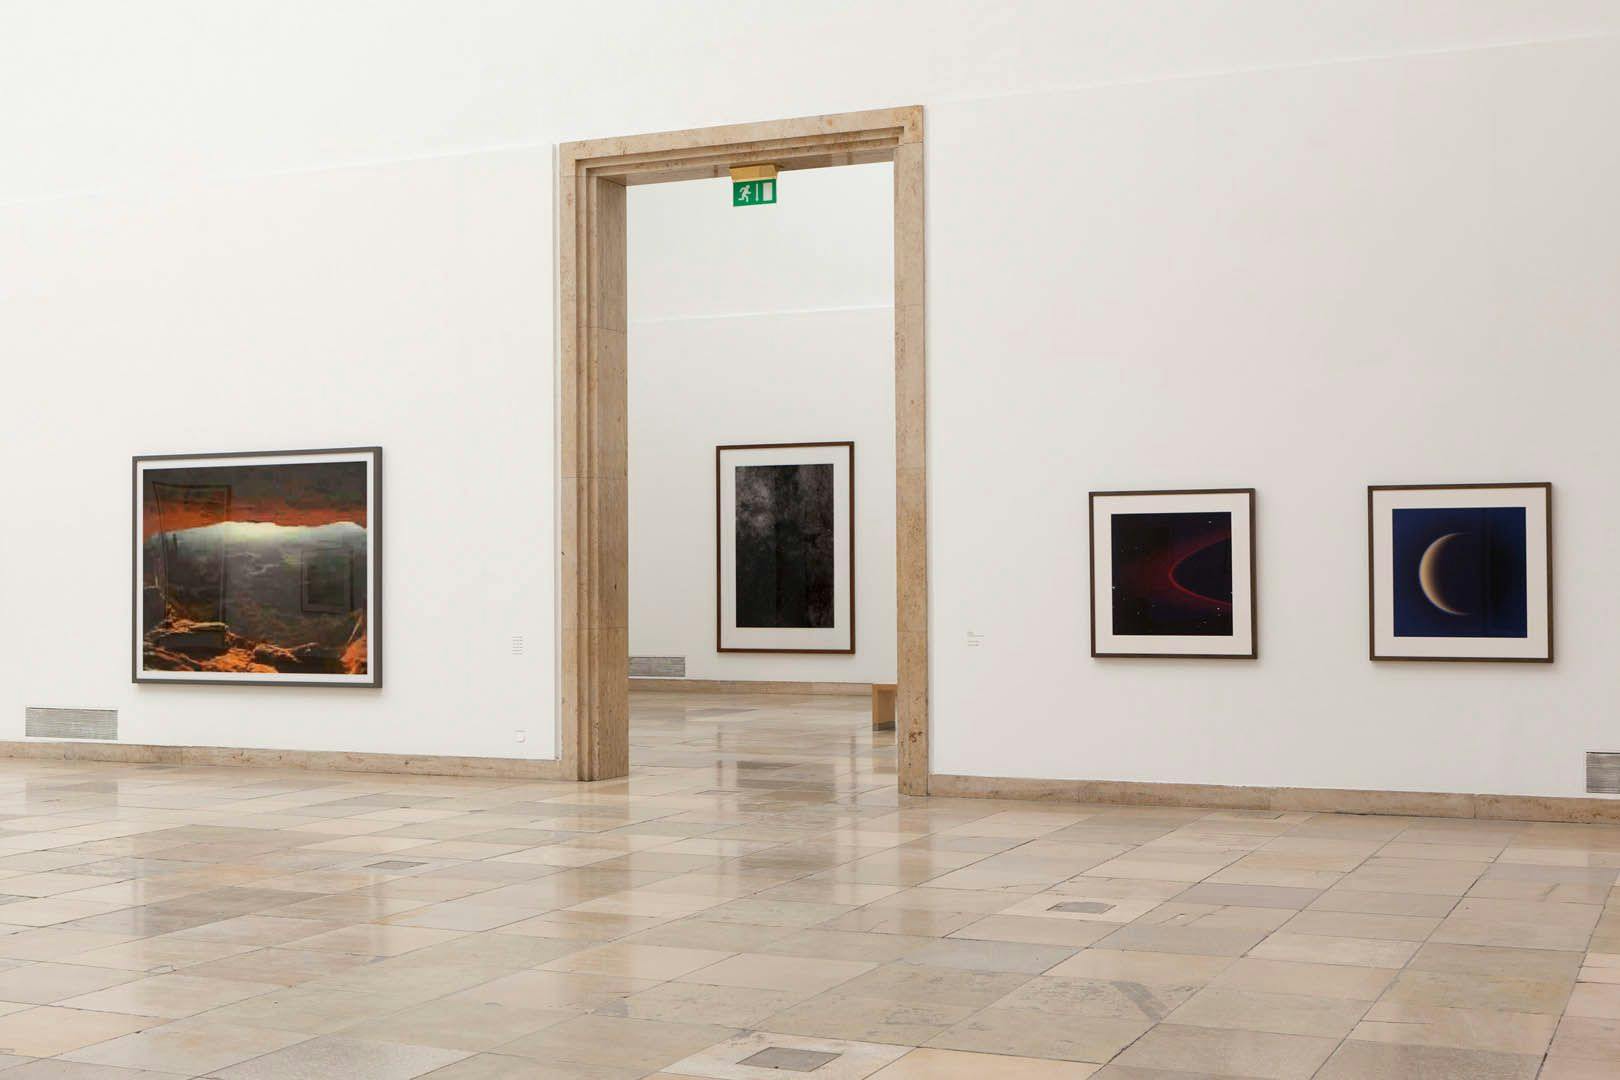 Installation view of the exhibition Thomas Ruff at Haus der Kunst in Munich, dated 2012.